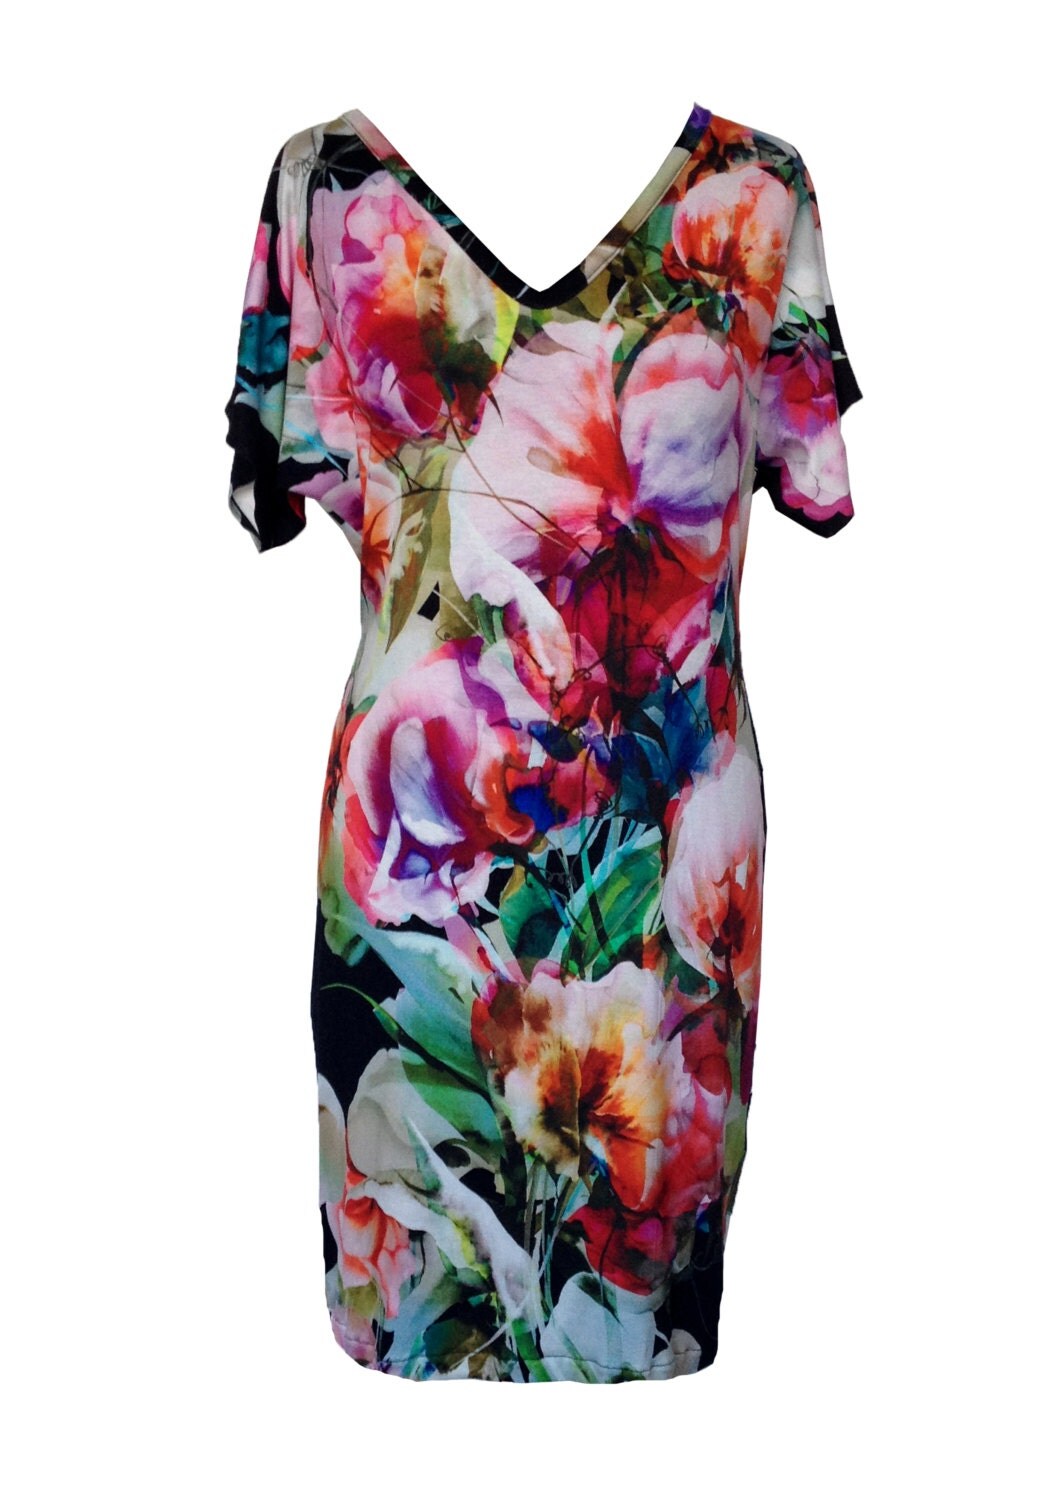 Floral Cotton Dress Plus Size Dress V Neck Dress Day by tamarziv